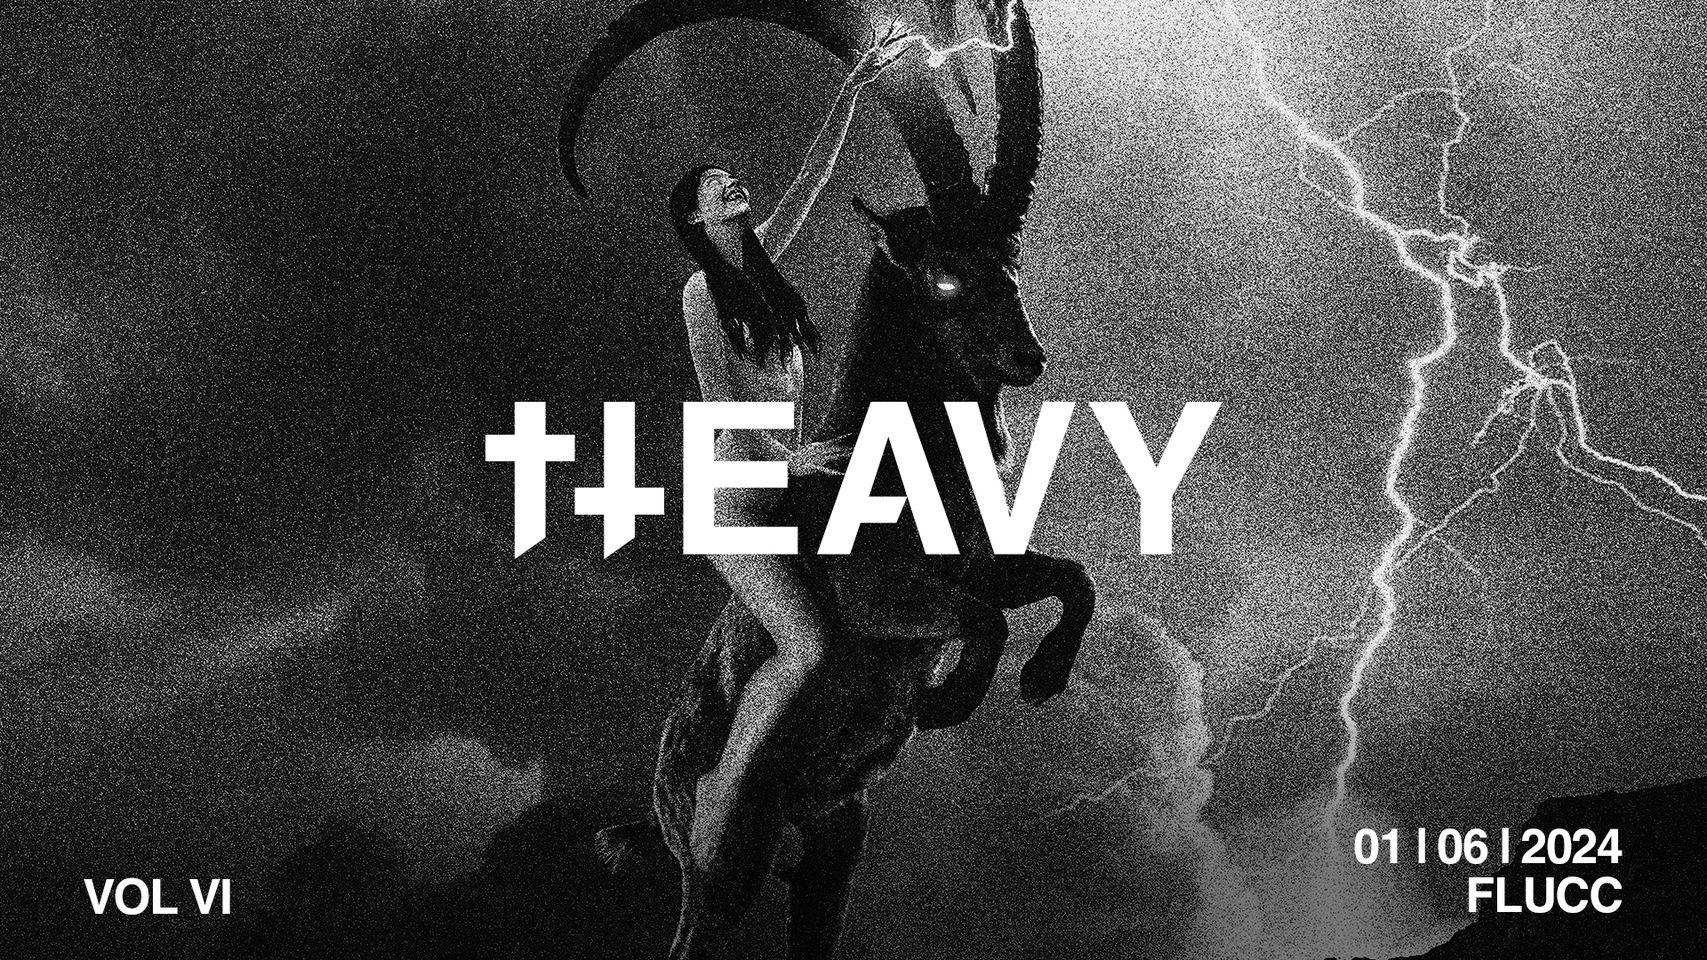 Heavy - The Metal Club Night am 1. June 2024 @ Flucc.